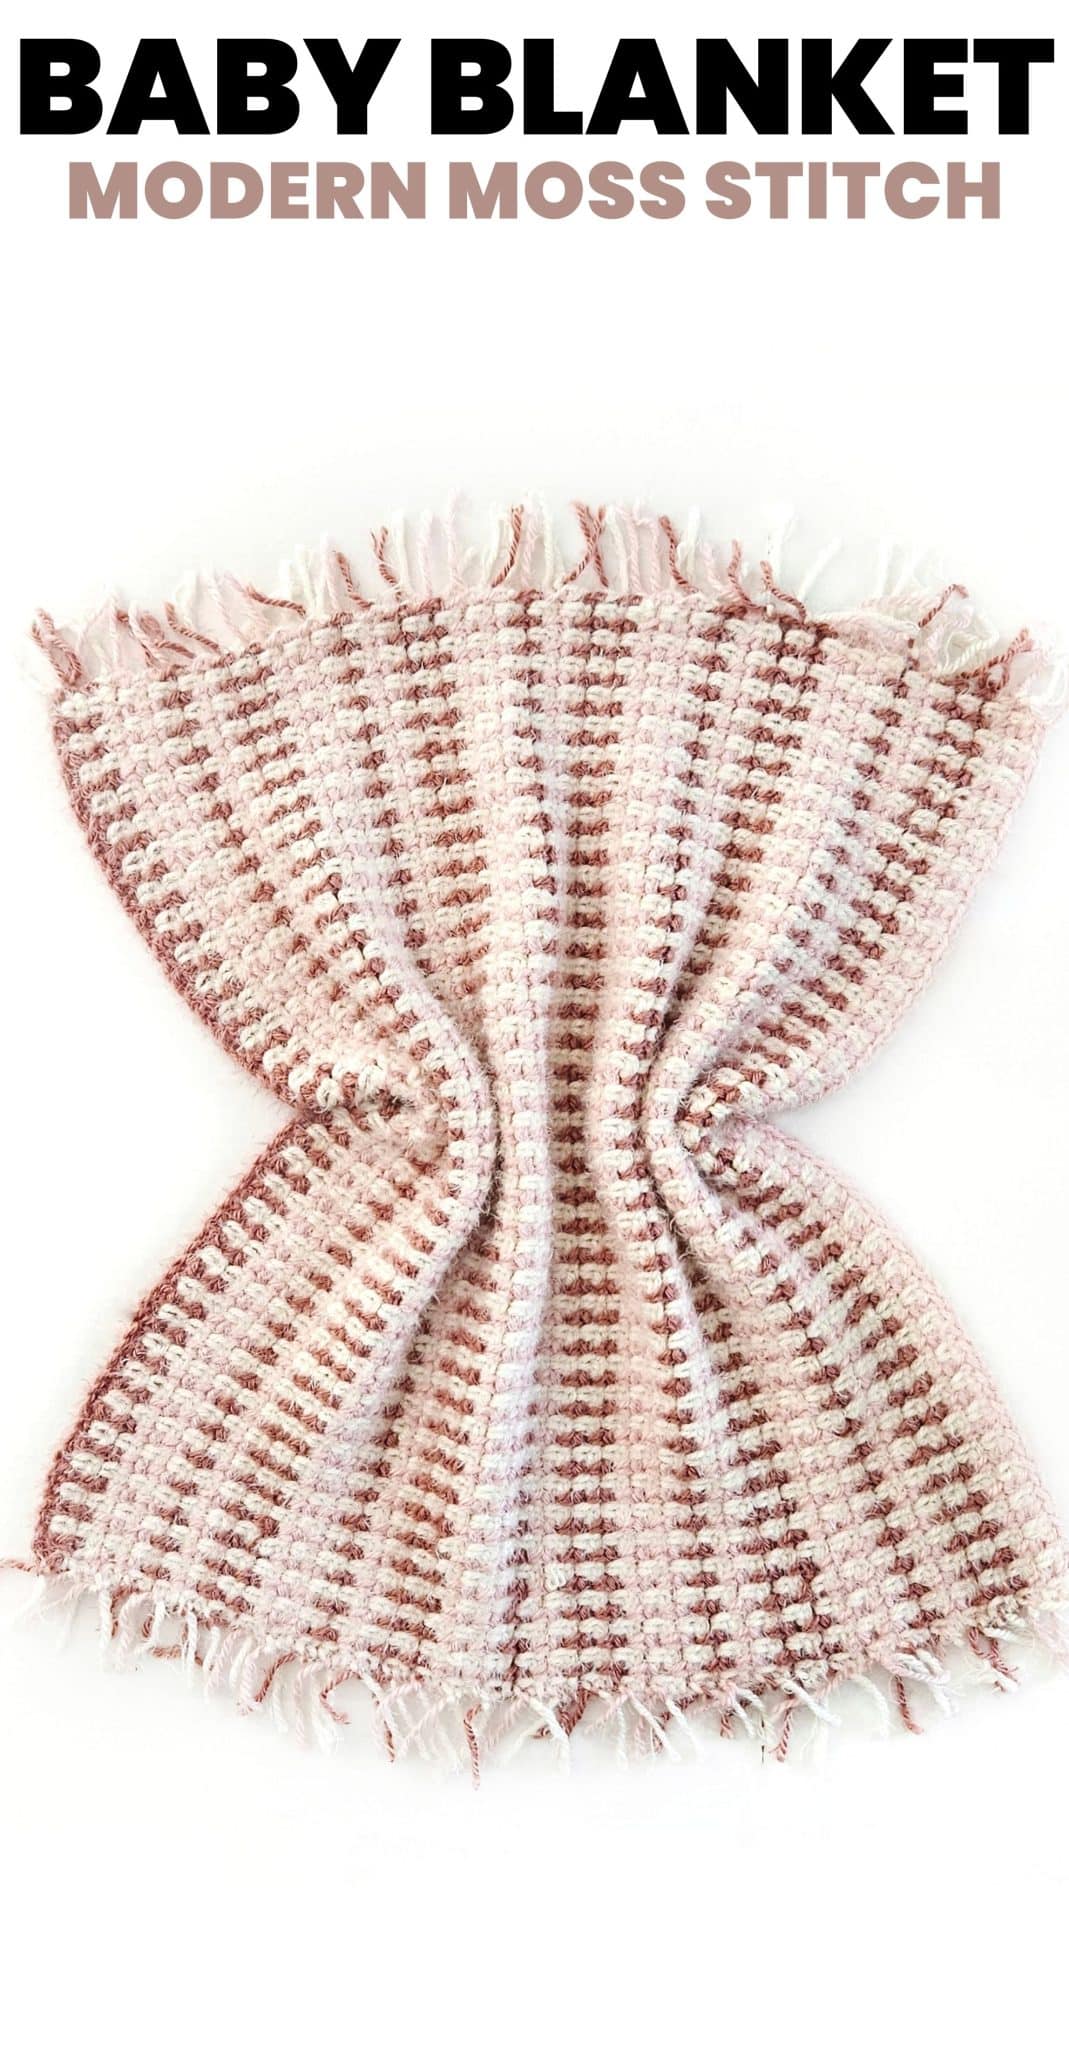 moss stitch baby blanket crochet